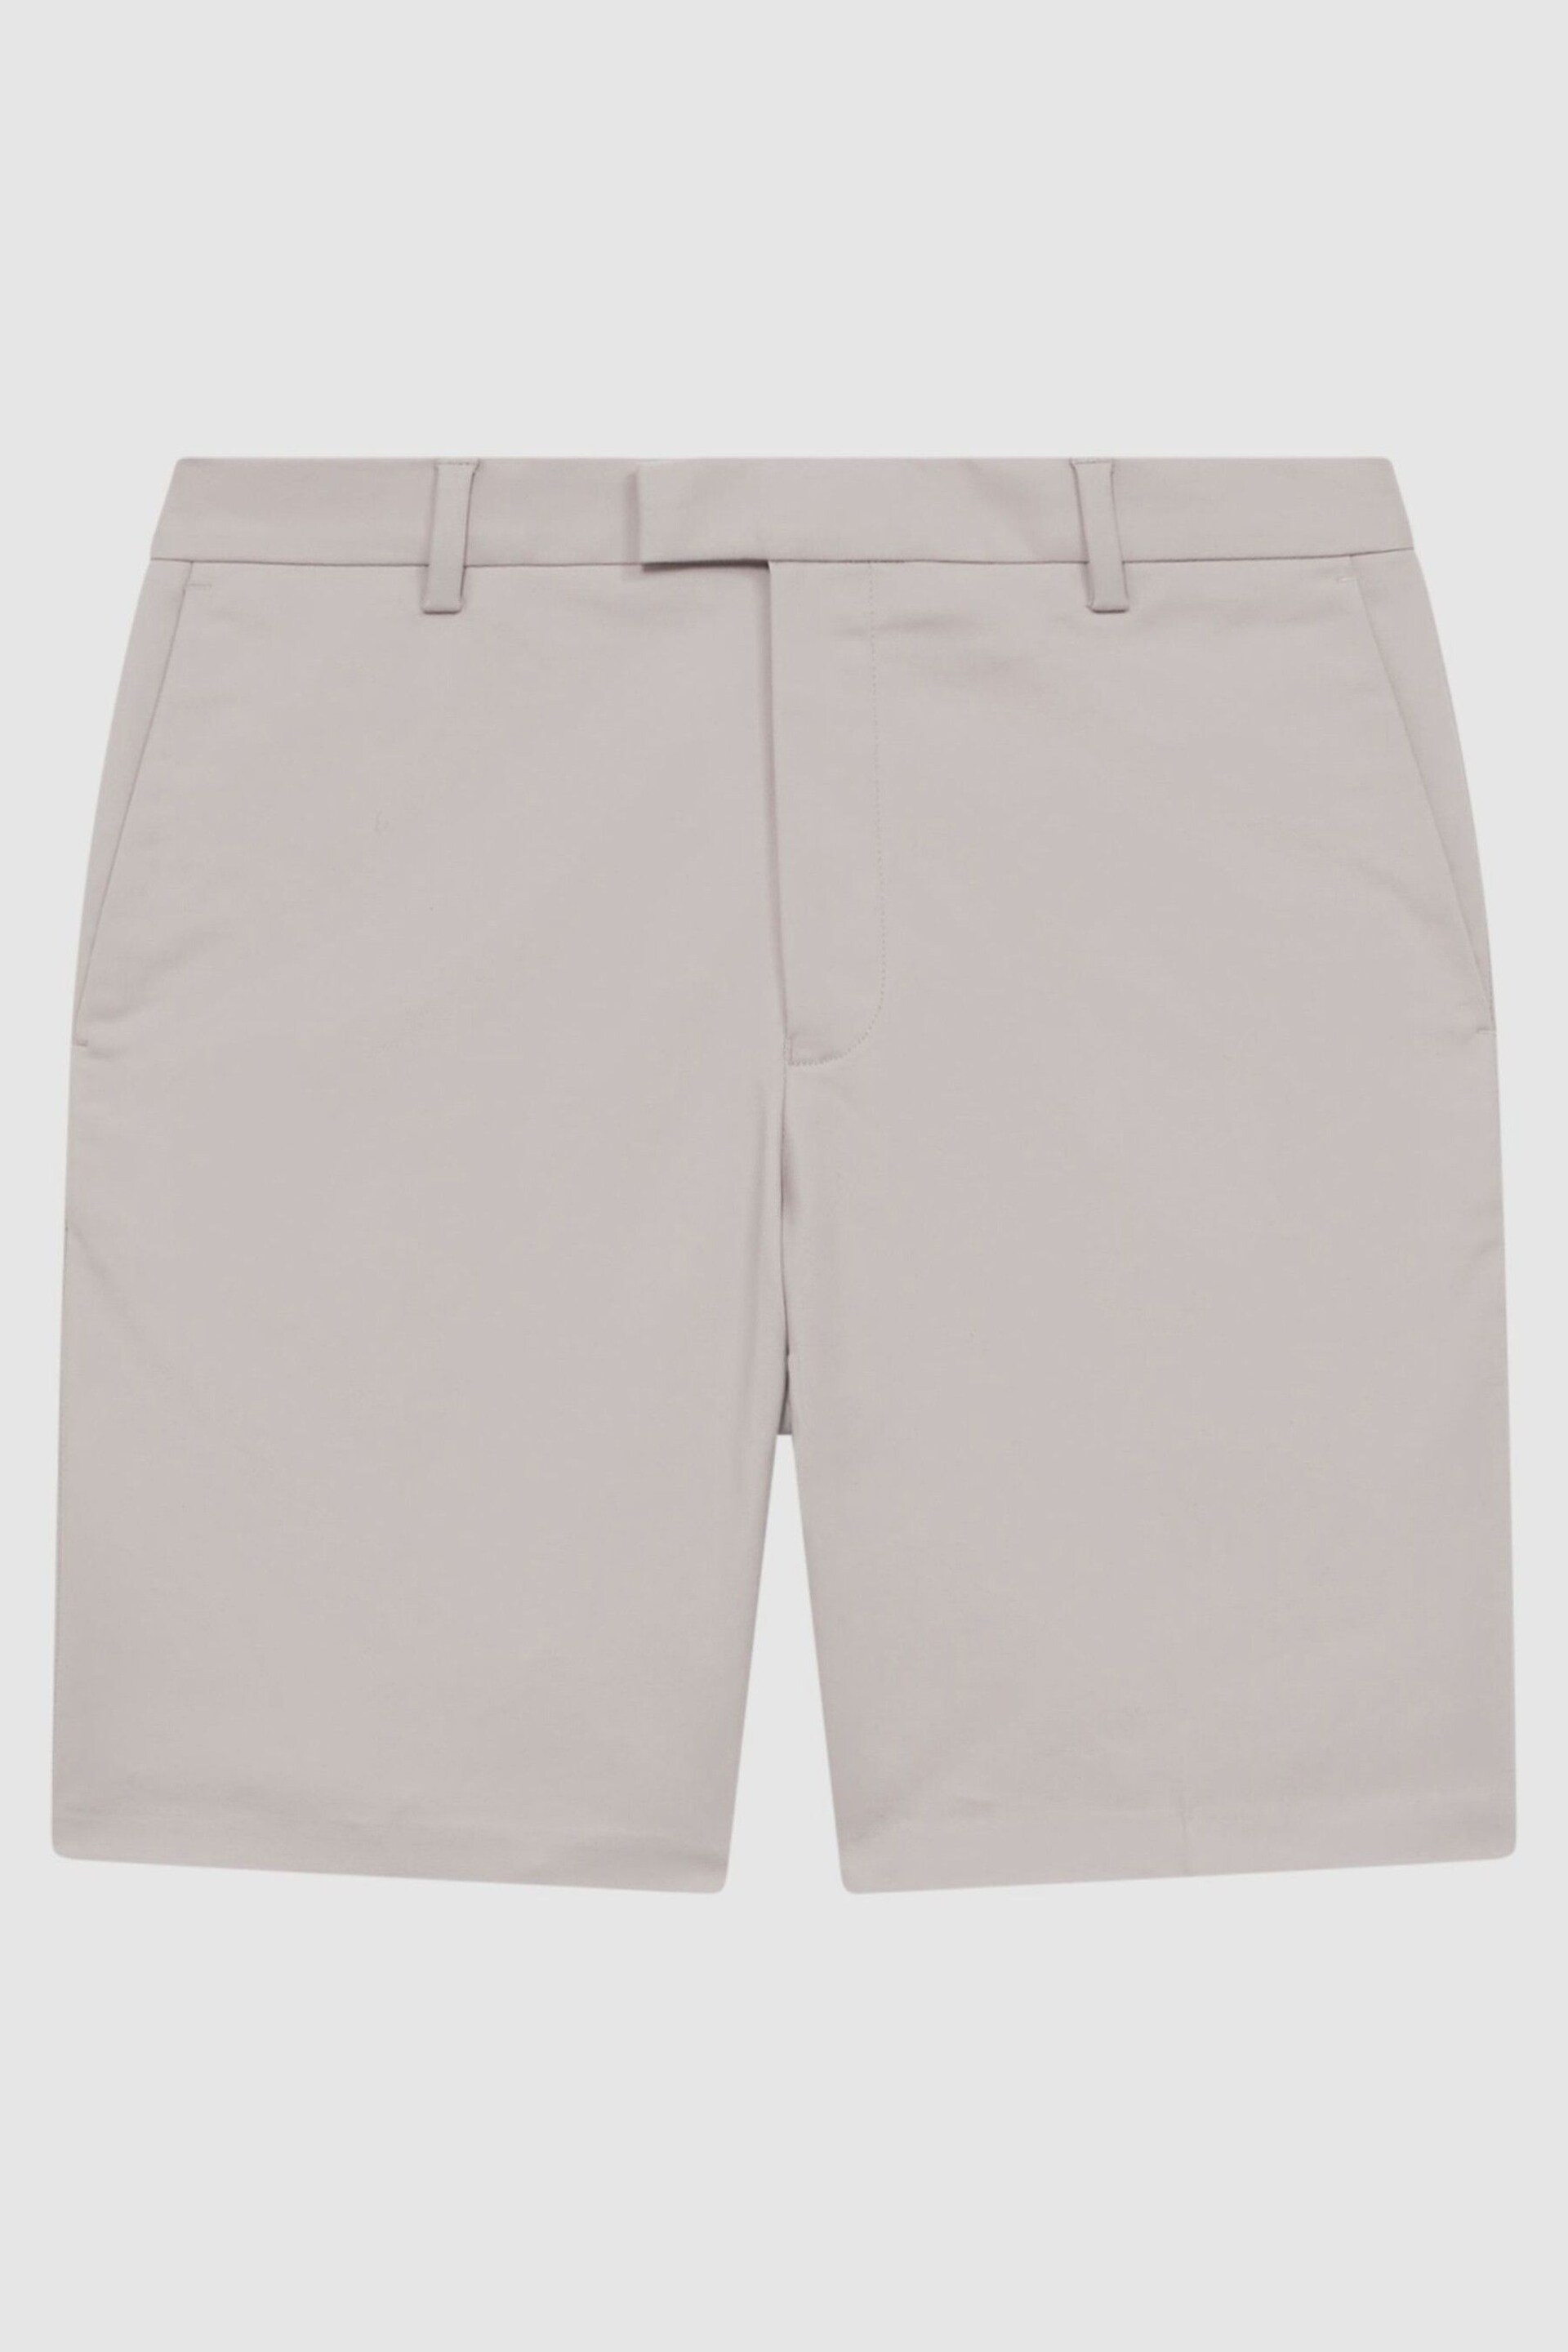 Reiss Stone Southbury Cotton Blend Chino Shorts - Image 2 of 6